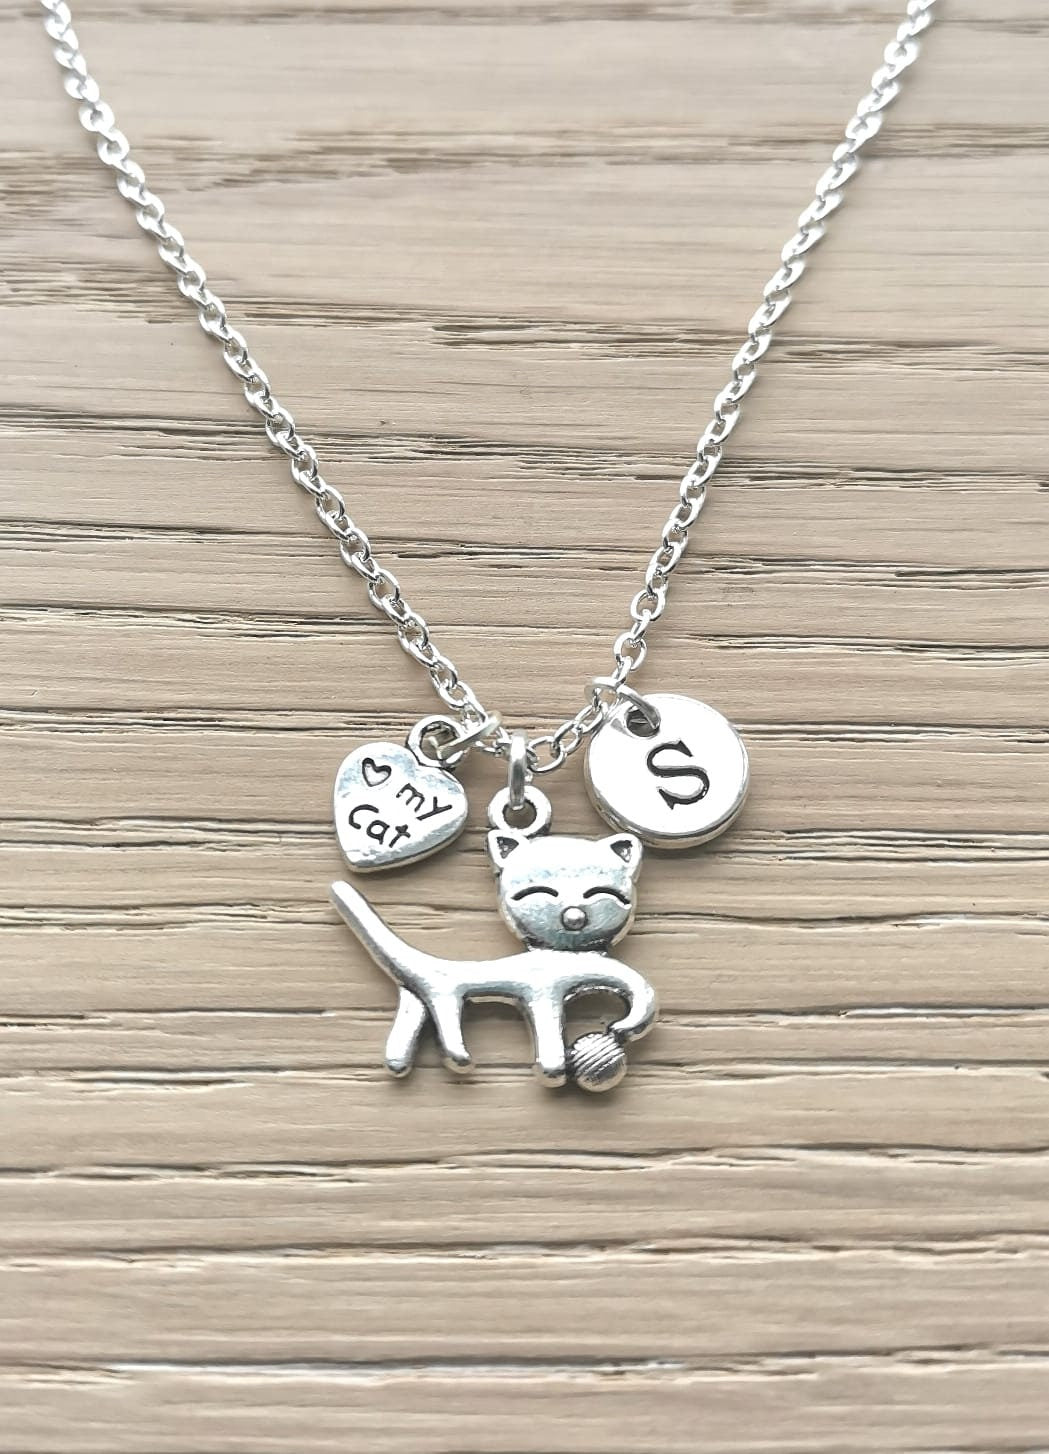 Cat Necklace, Cat Charm Necklace, Cat Lover Necklace, Personalized Cat Charm Necklace, Cat Gift,Cat Loss Gift,Pet Loss Gift,Petloss Necklace